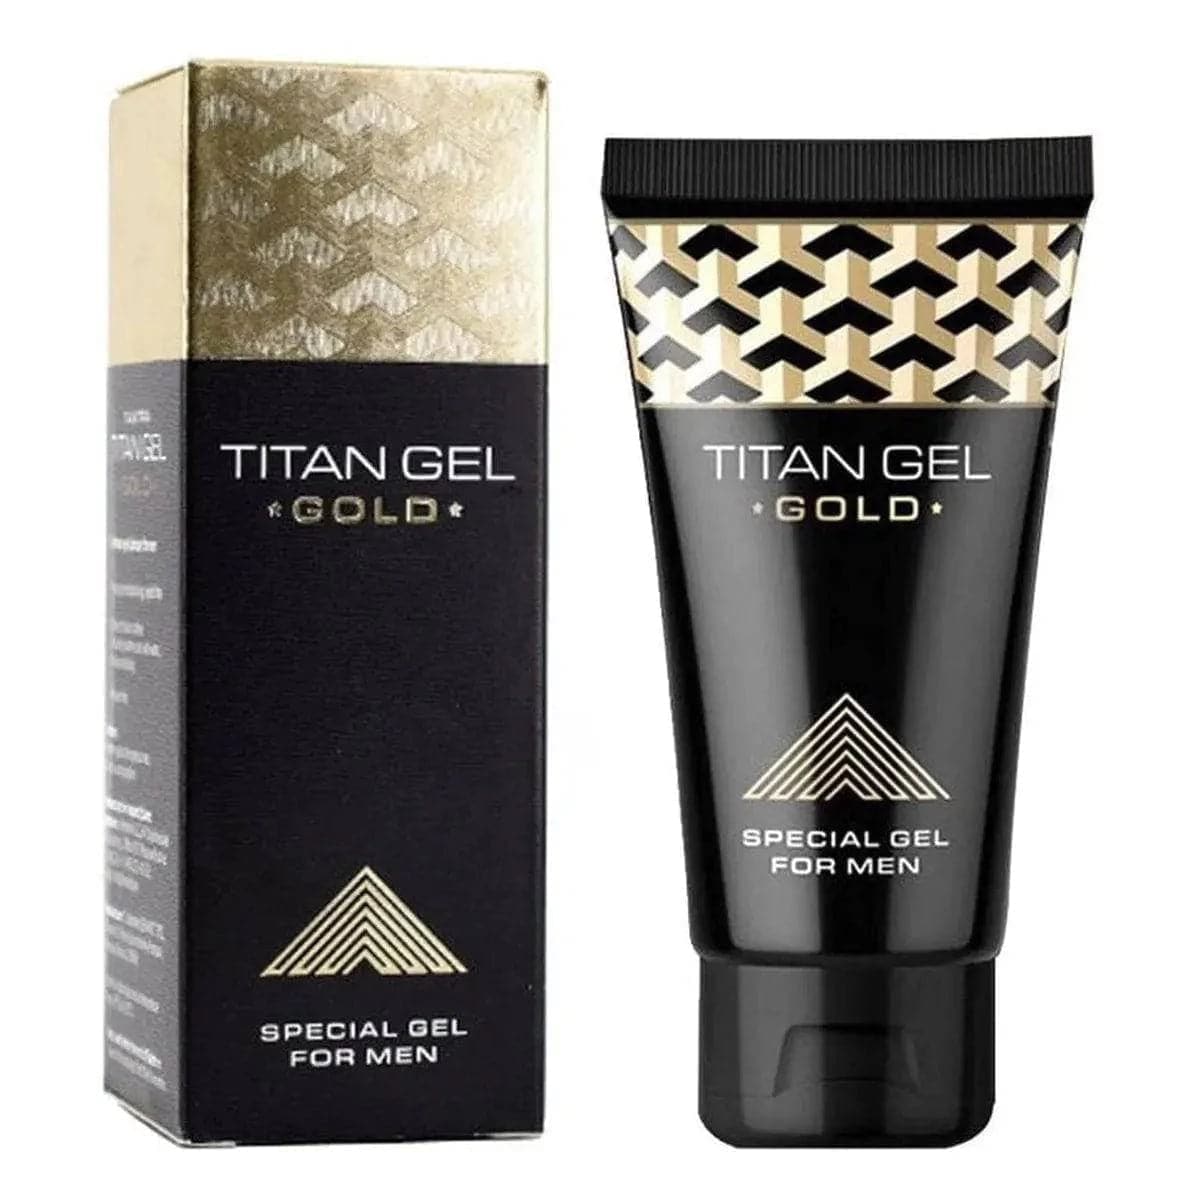 Creme Aumento do Pénis Titan Gel Gold 50ml + Desempenho Sexual  Titan Gel   